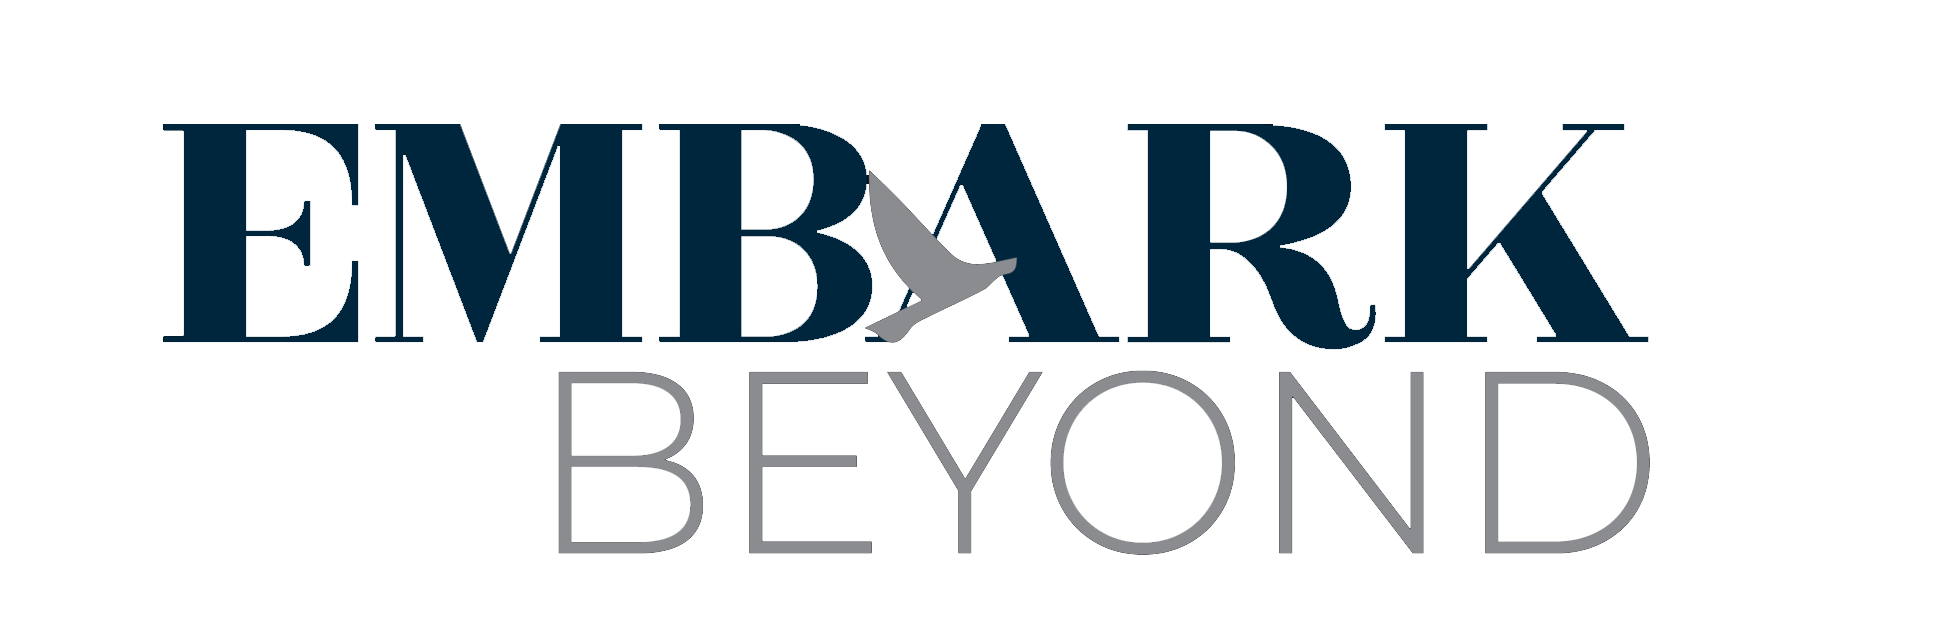 embark beyond travel logo